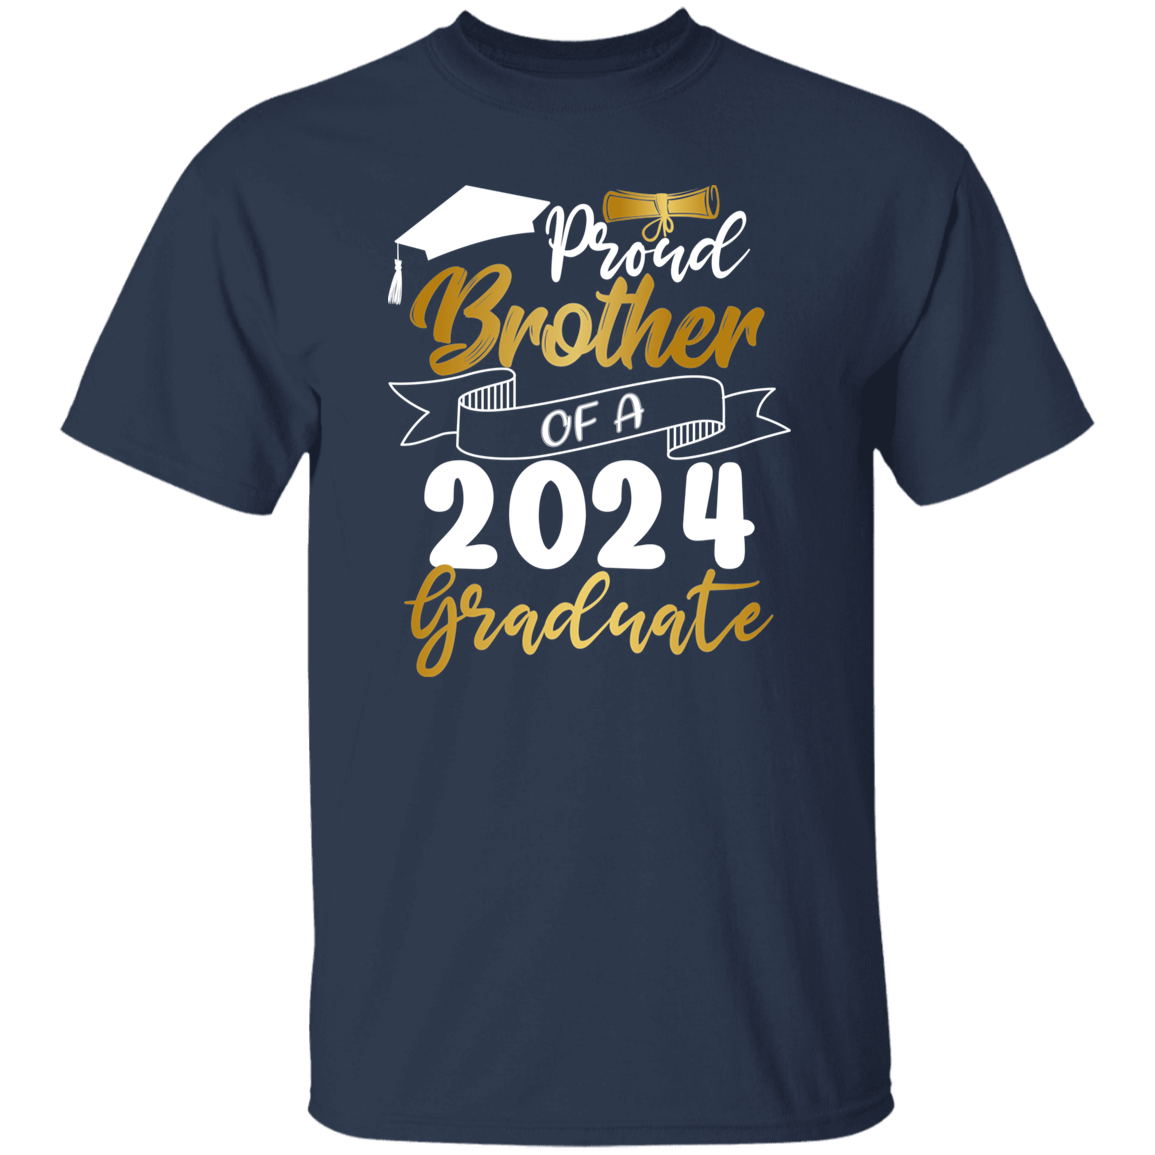 Proud Sister Brother Graduation T-Shirt 2024